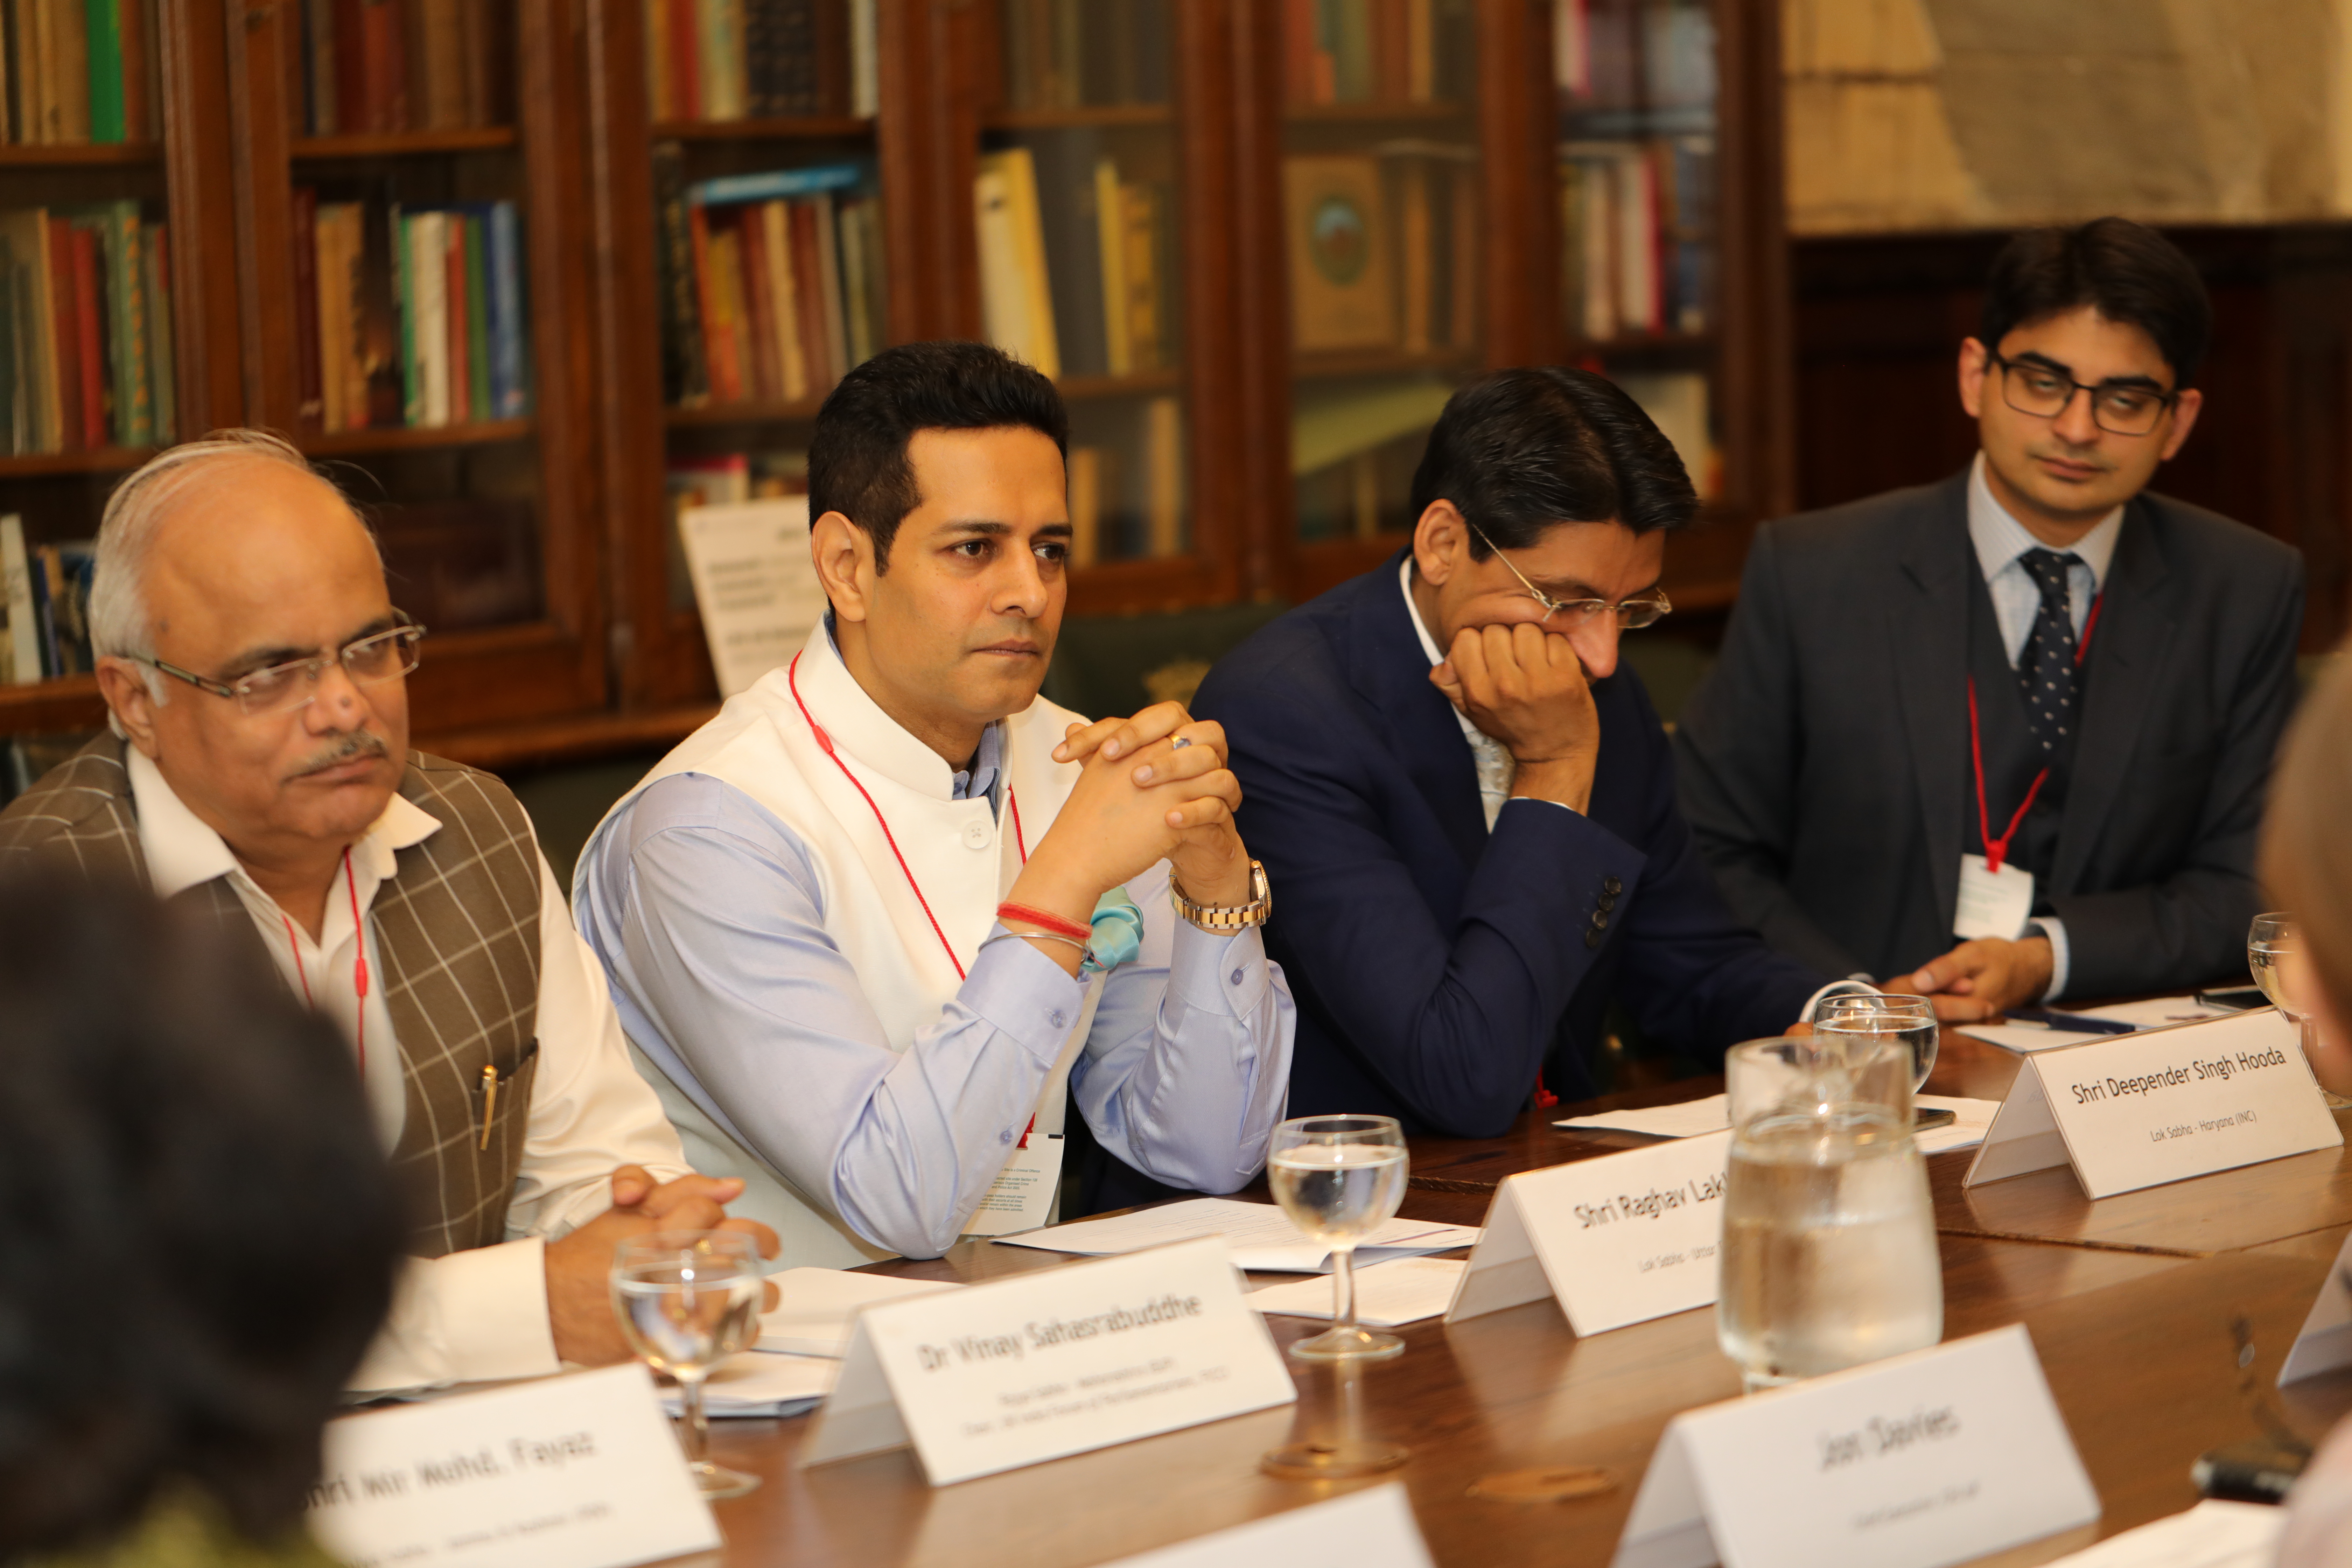 l.t.r.: Dr Vinay Sahasrabuddhe (BJP), Chair, FICCI India UK Forum of Parliamentarians; Shri Raghav Lakhanpal (BJP); Shri Deepender Singh Hooda (INC); Krishnan Ladva, UK Office, FICCI